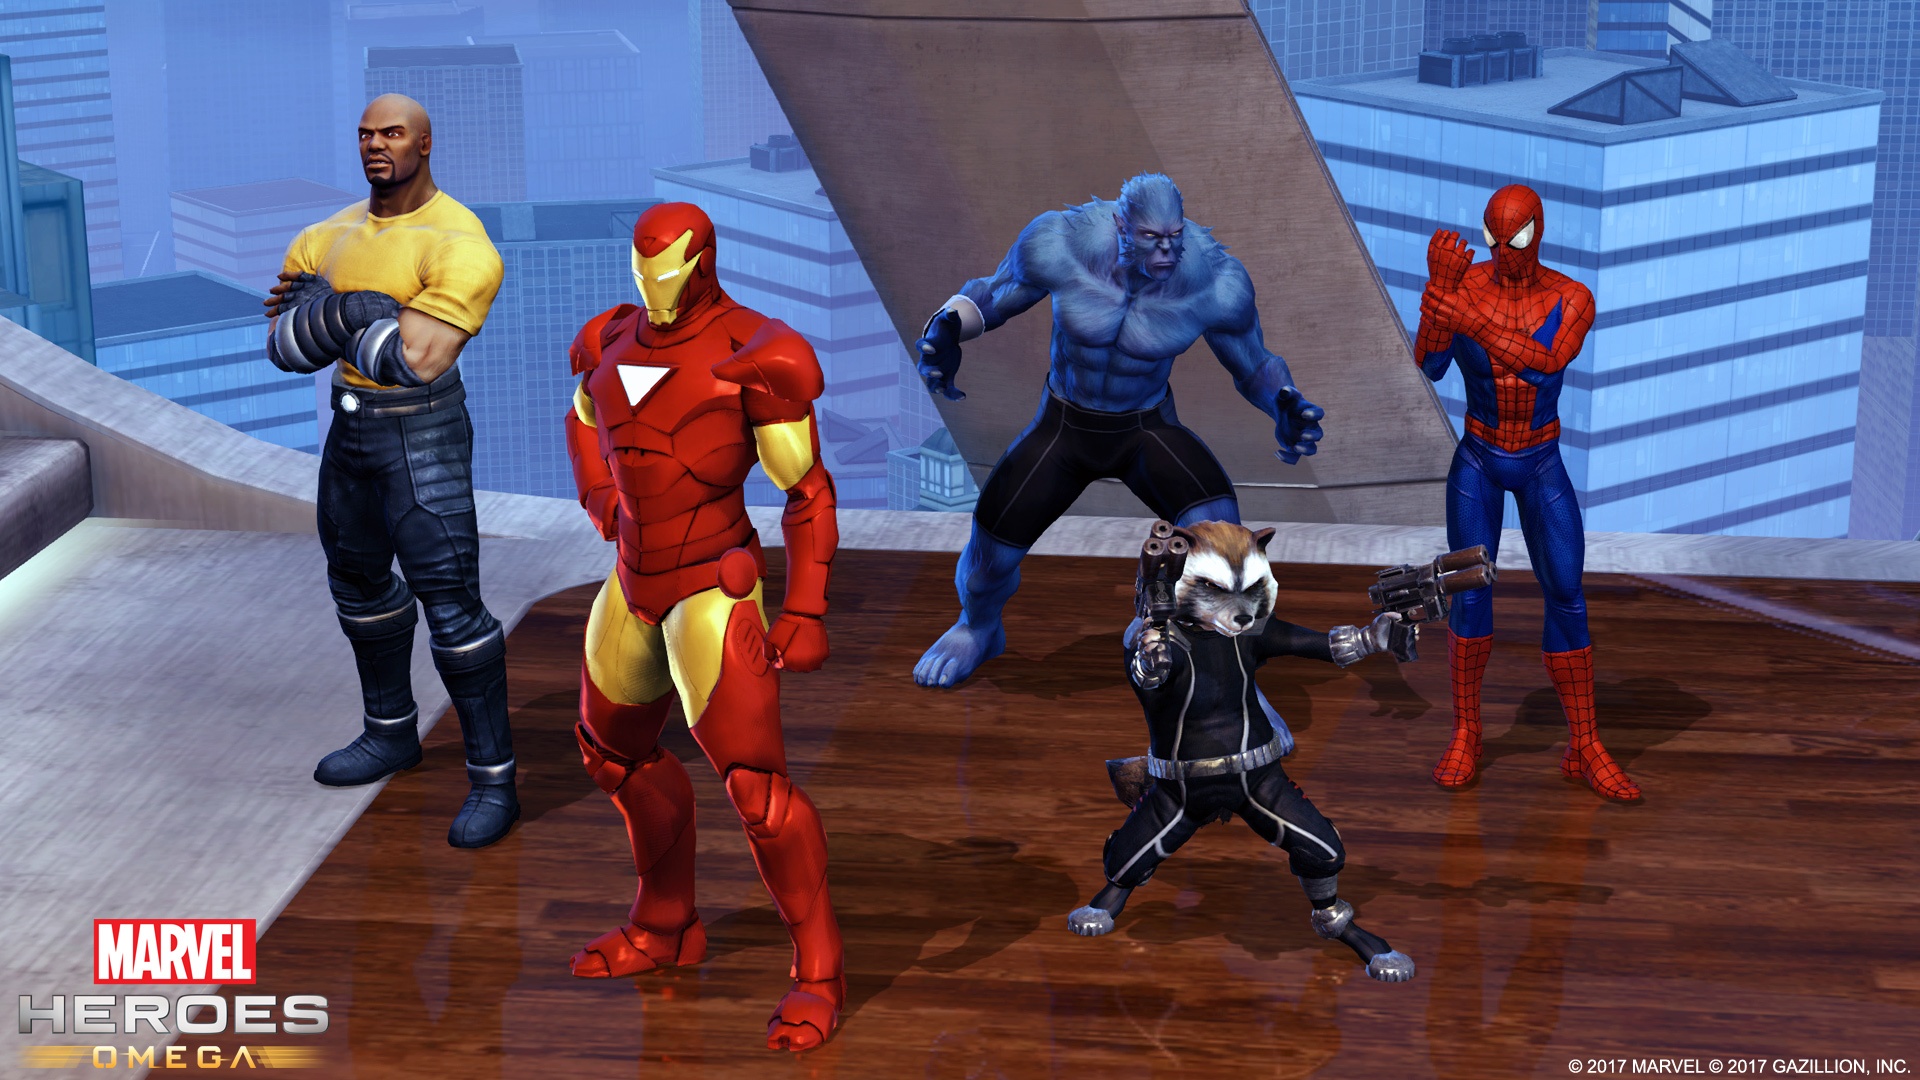 Marvel Heroes Omega - Teaming Up